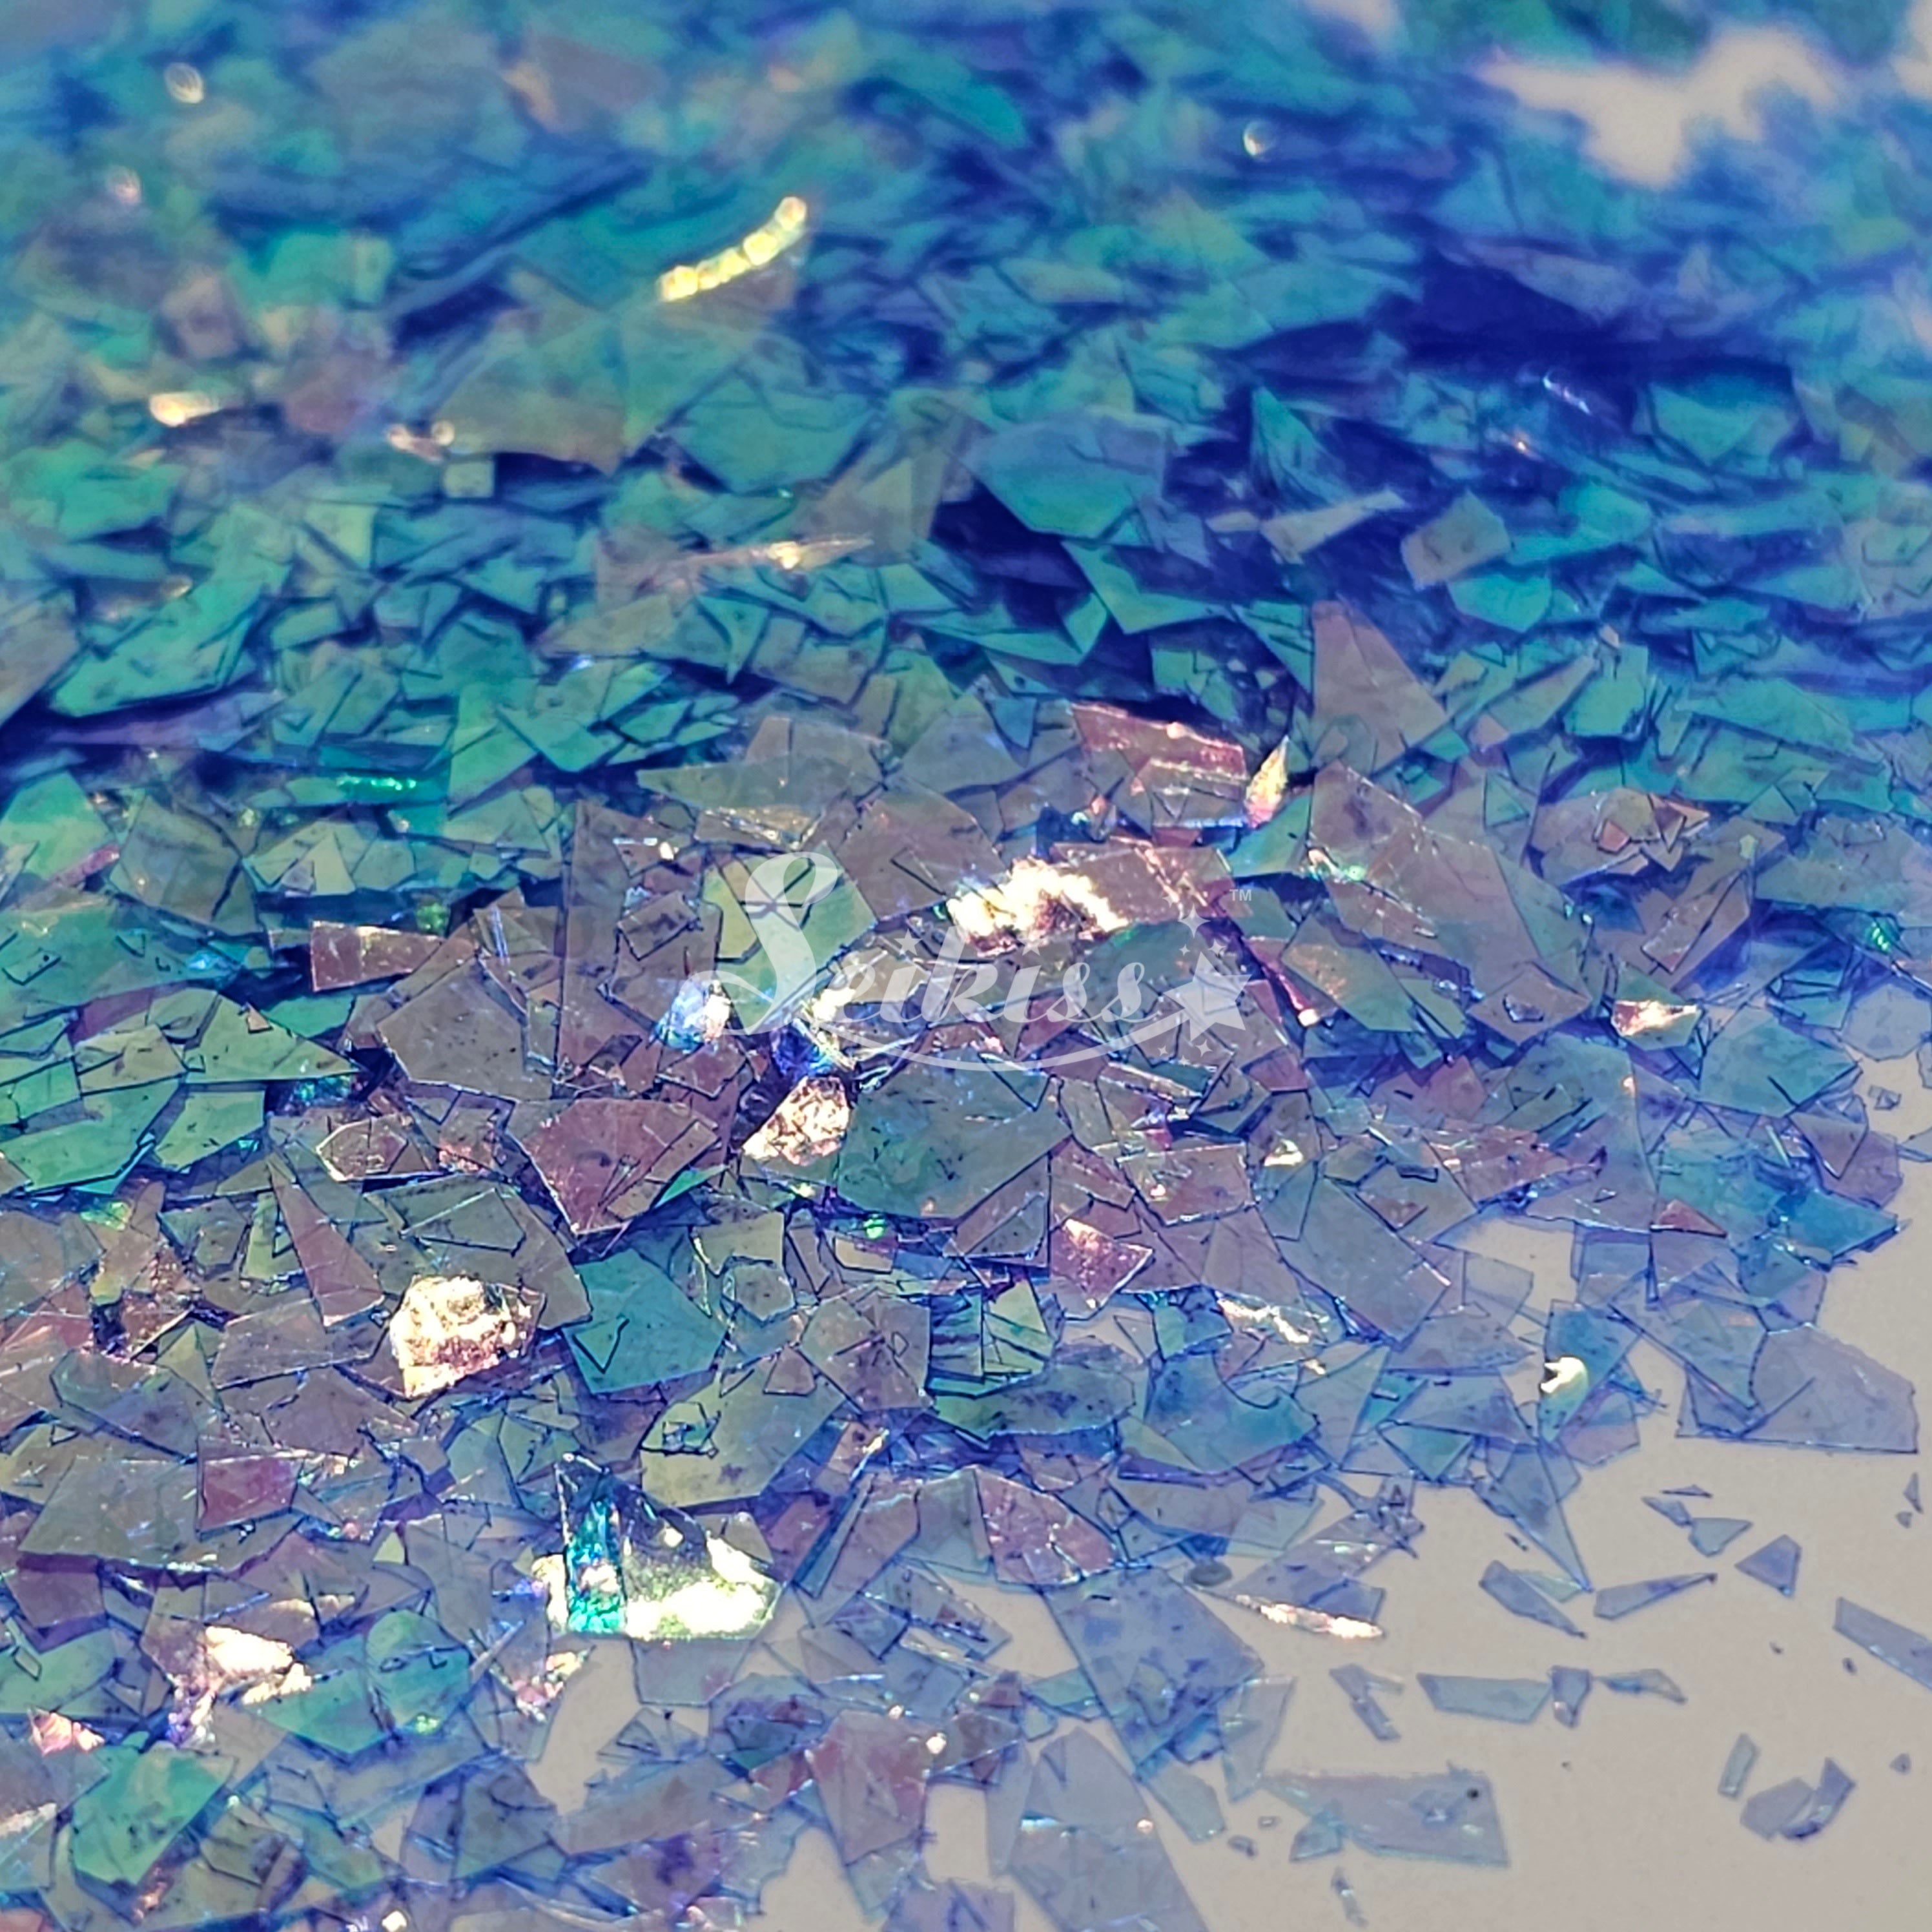 Holographic Extra Fine Glitter Powder - 50g/1.76oz （5 Colors